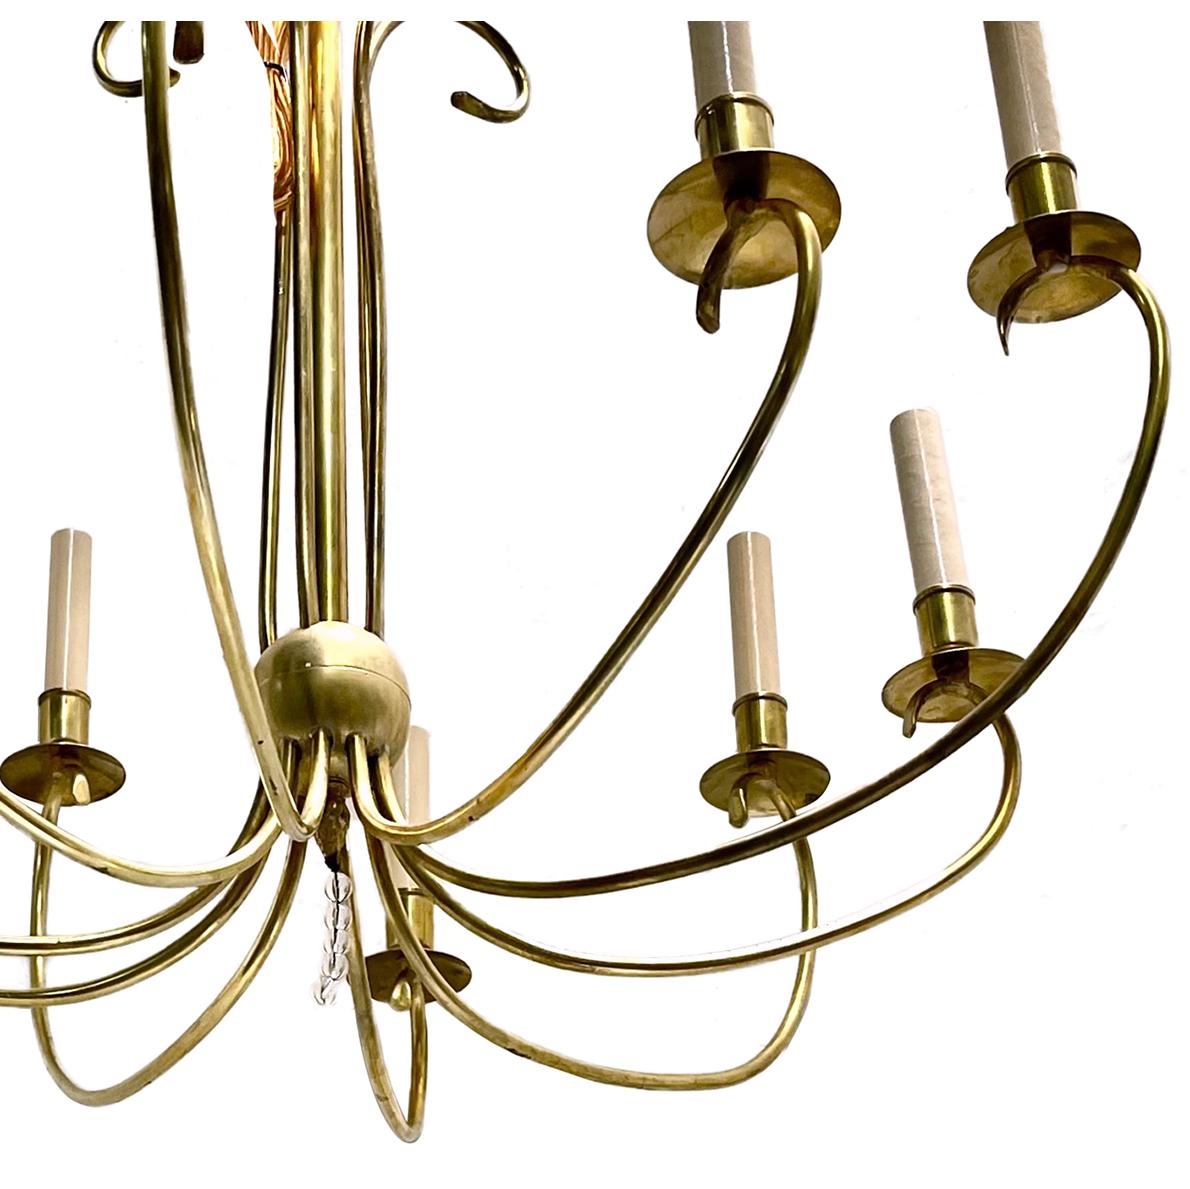 A circa 1960's French polished bronze ten-arm chandelier.

Measurements:
Diameter: 27?
Drop: 33?.